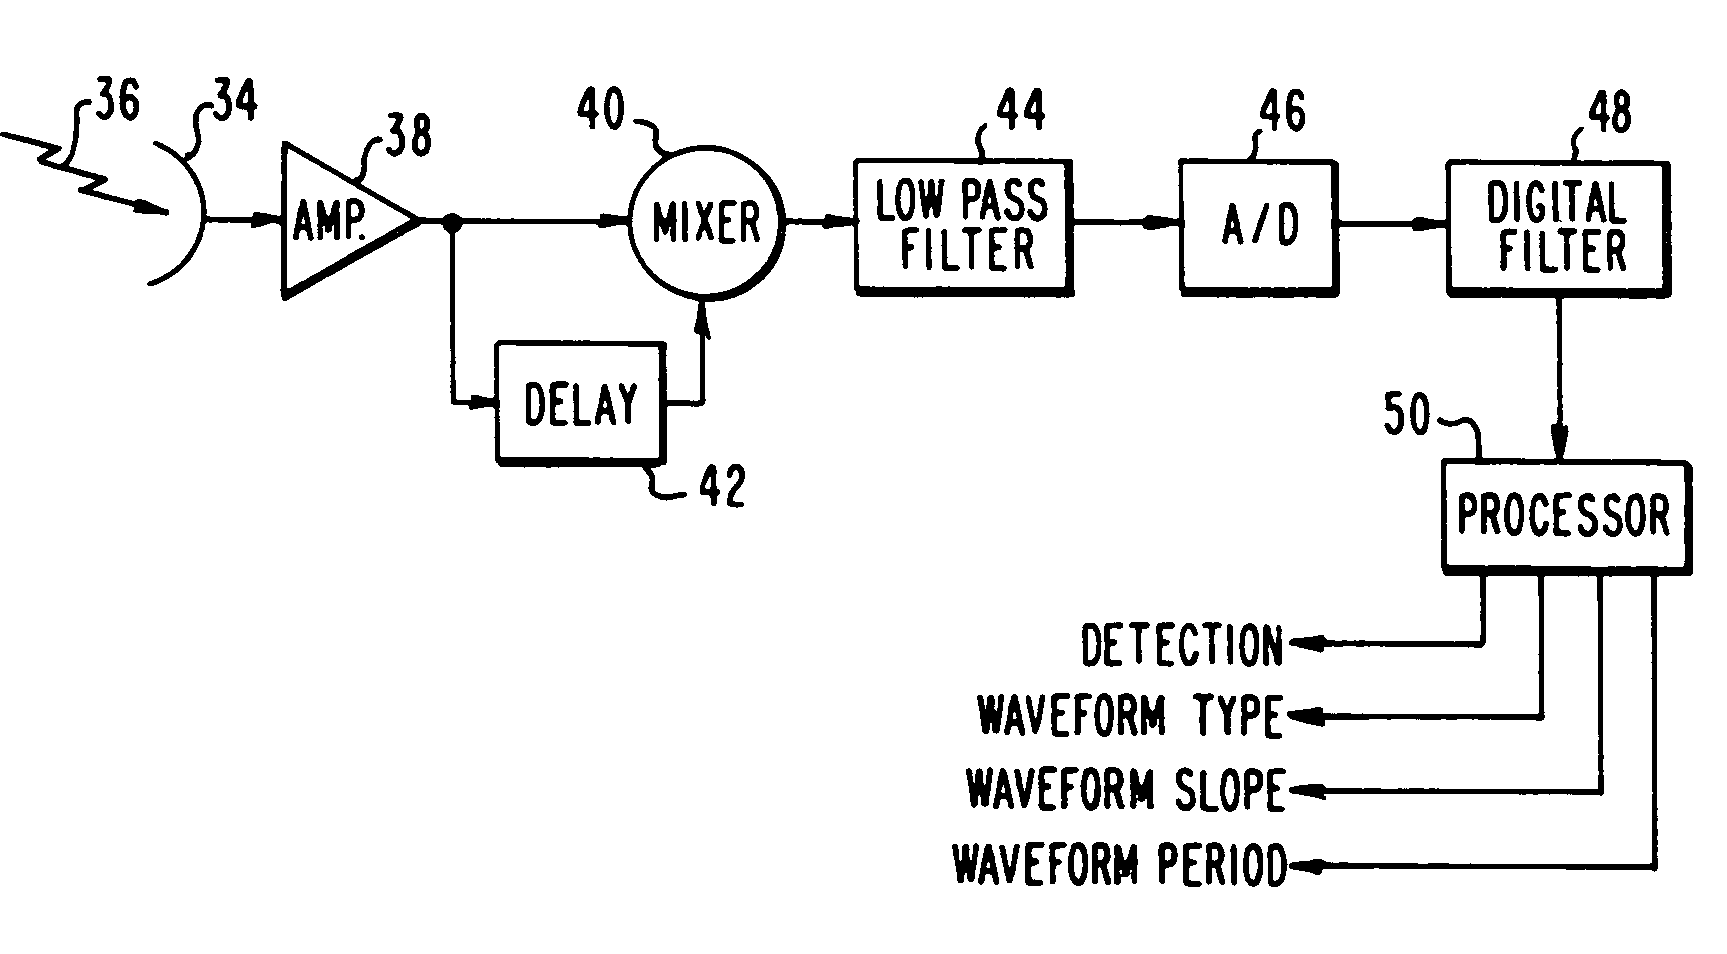 FM-CW altimeter detector